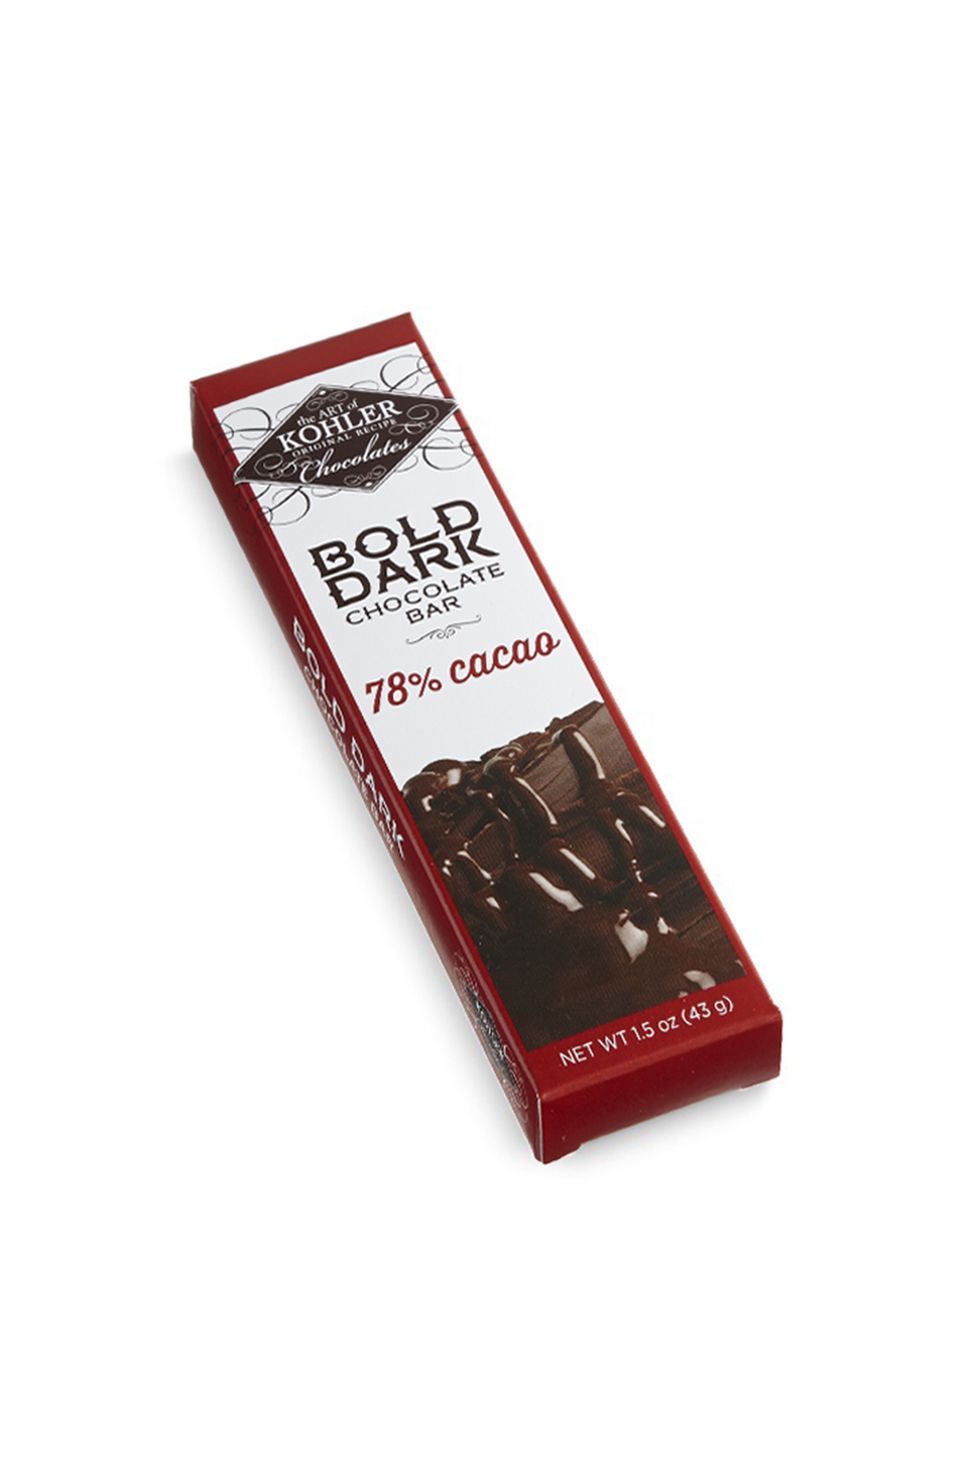 10 Best Dark Chocolate Bars 2022 - Dark Chocolate Candy, Ranked